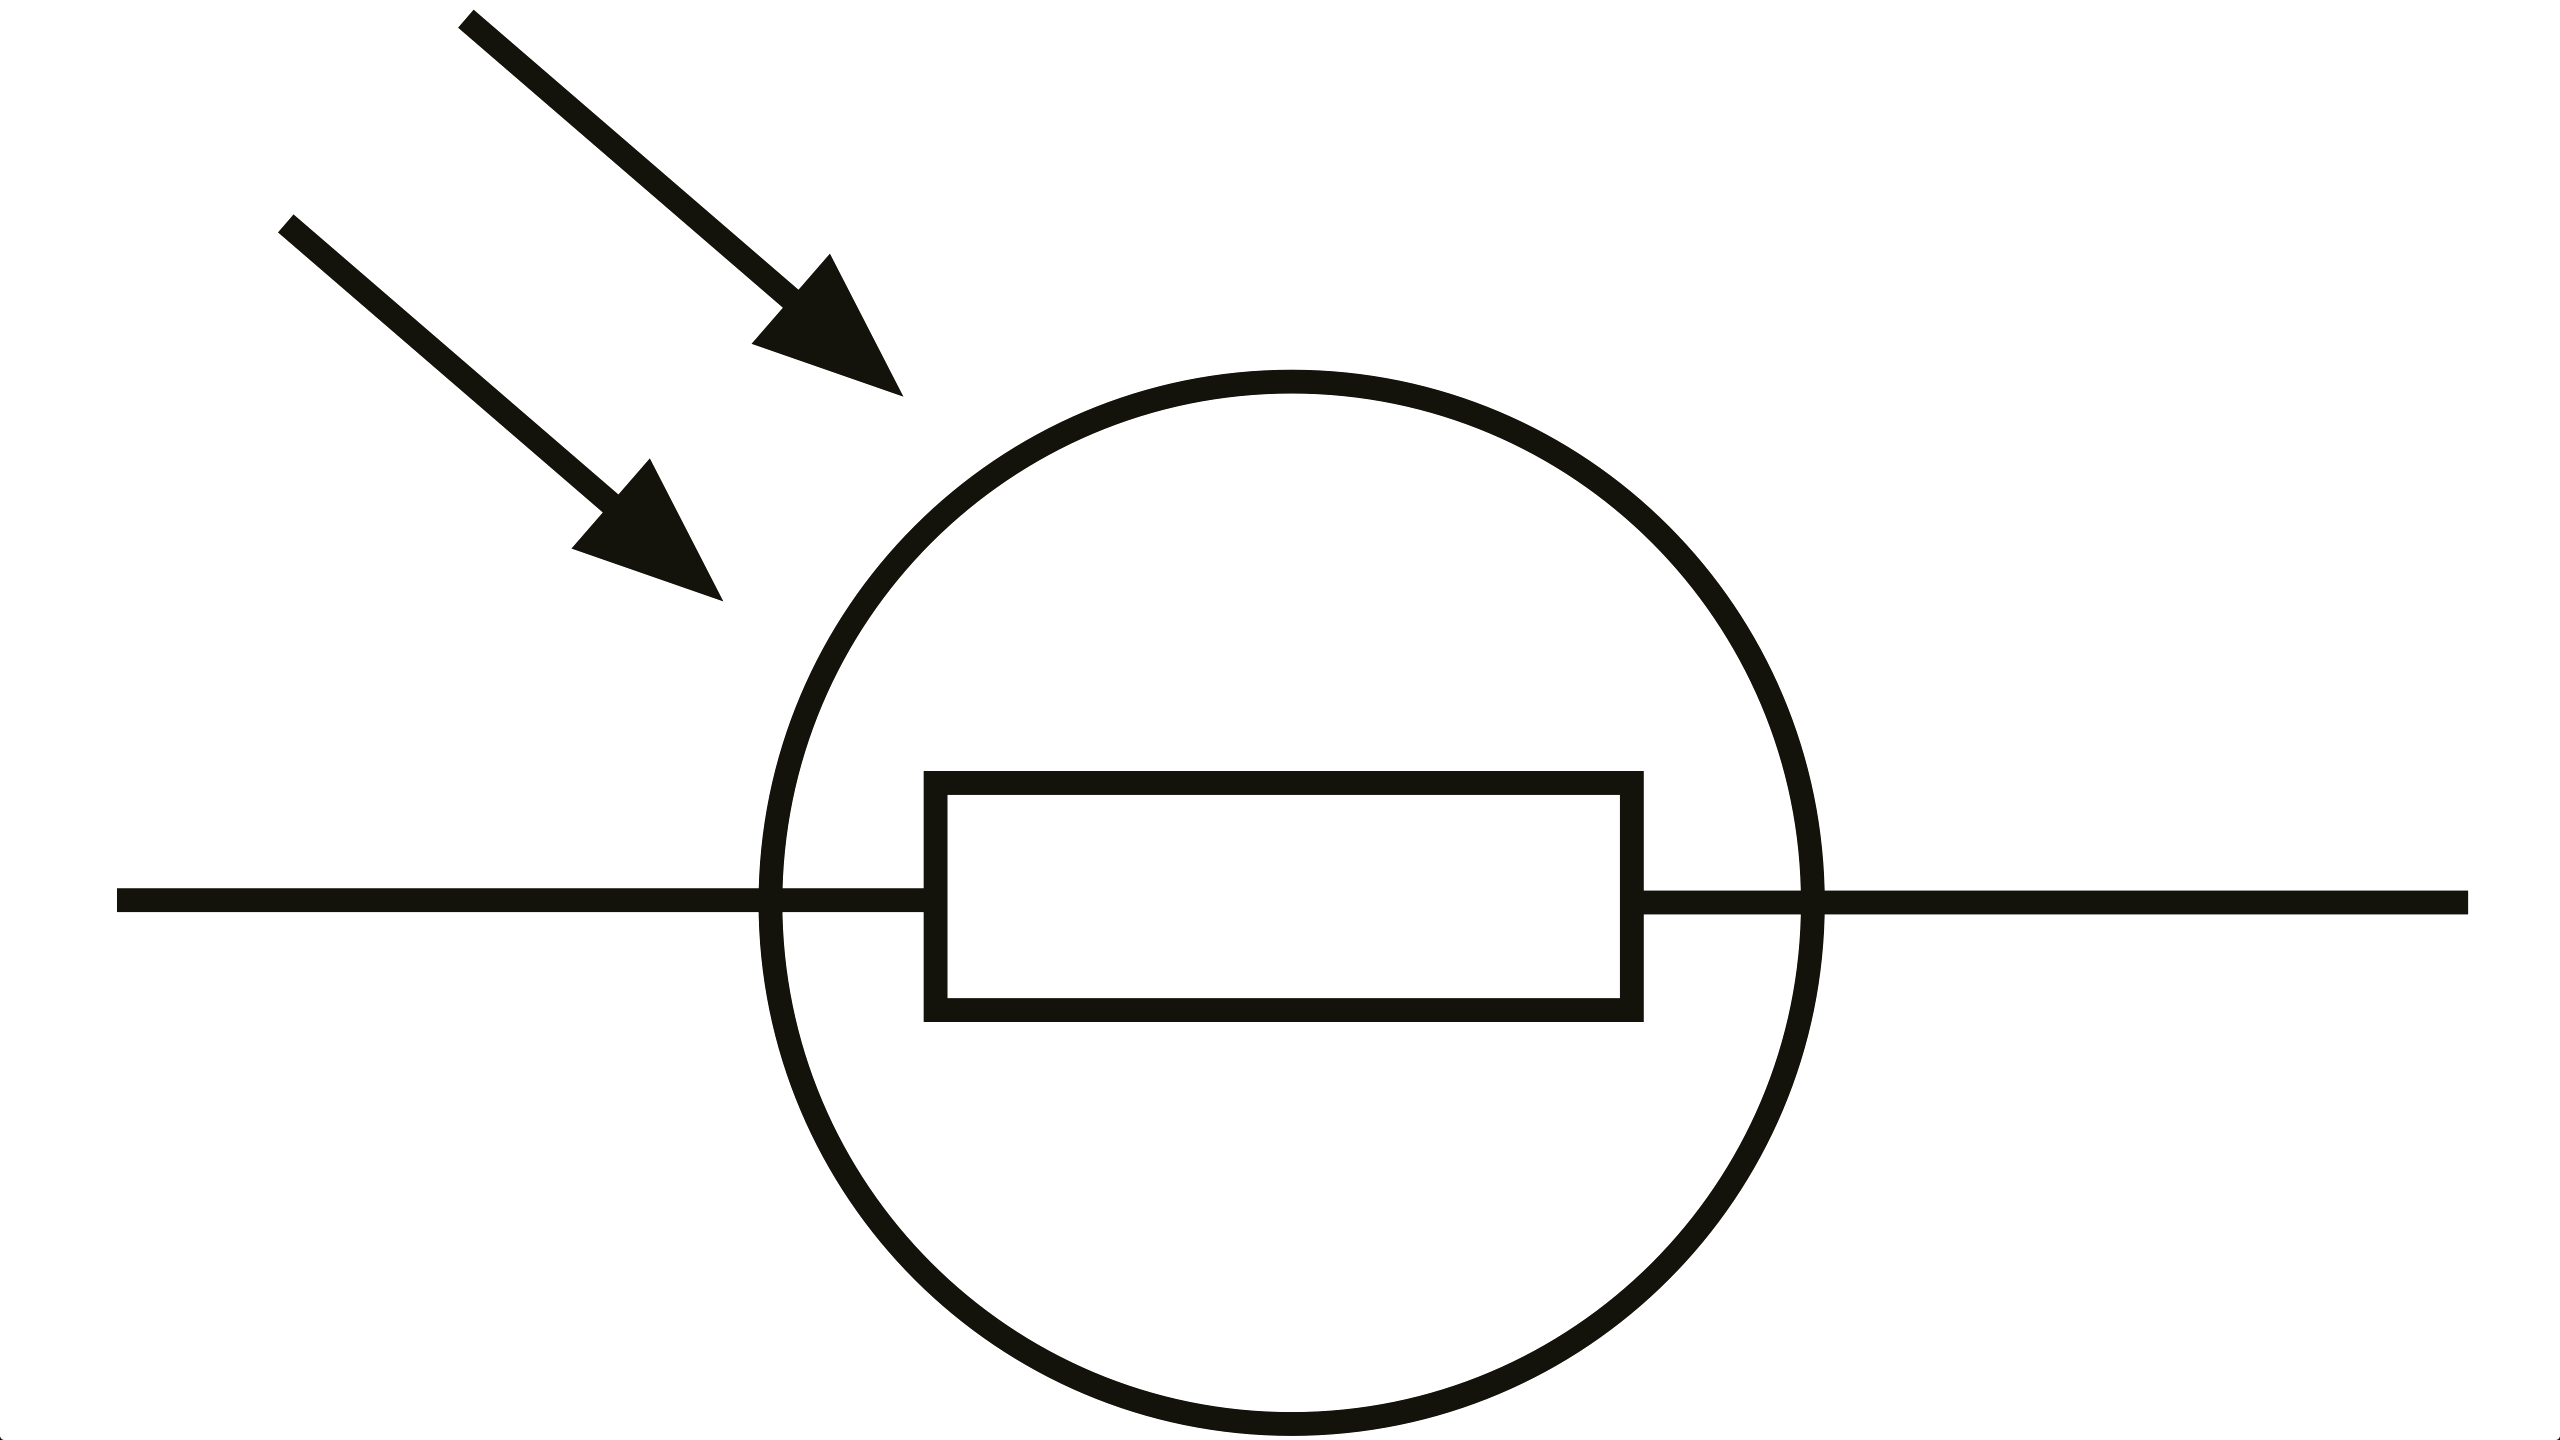 Component. resistor schematic symbols: Physcomp Devices Schematics ...